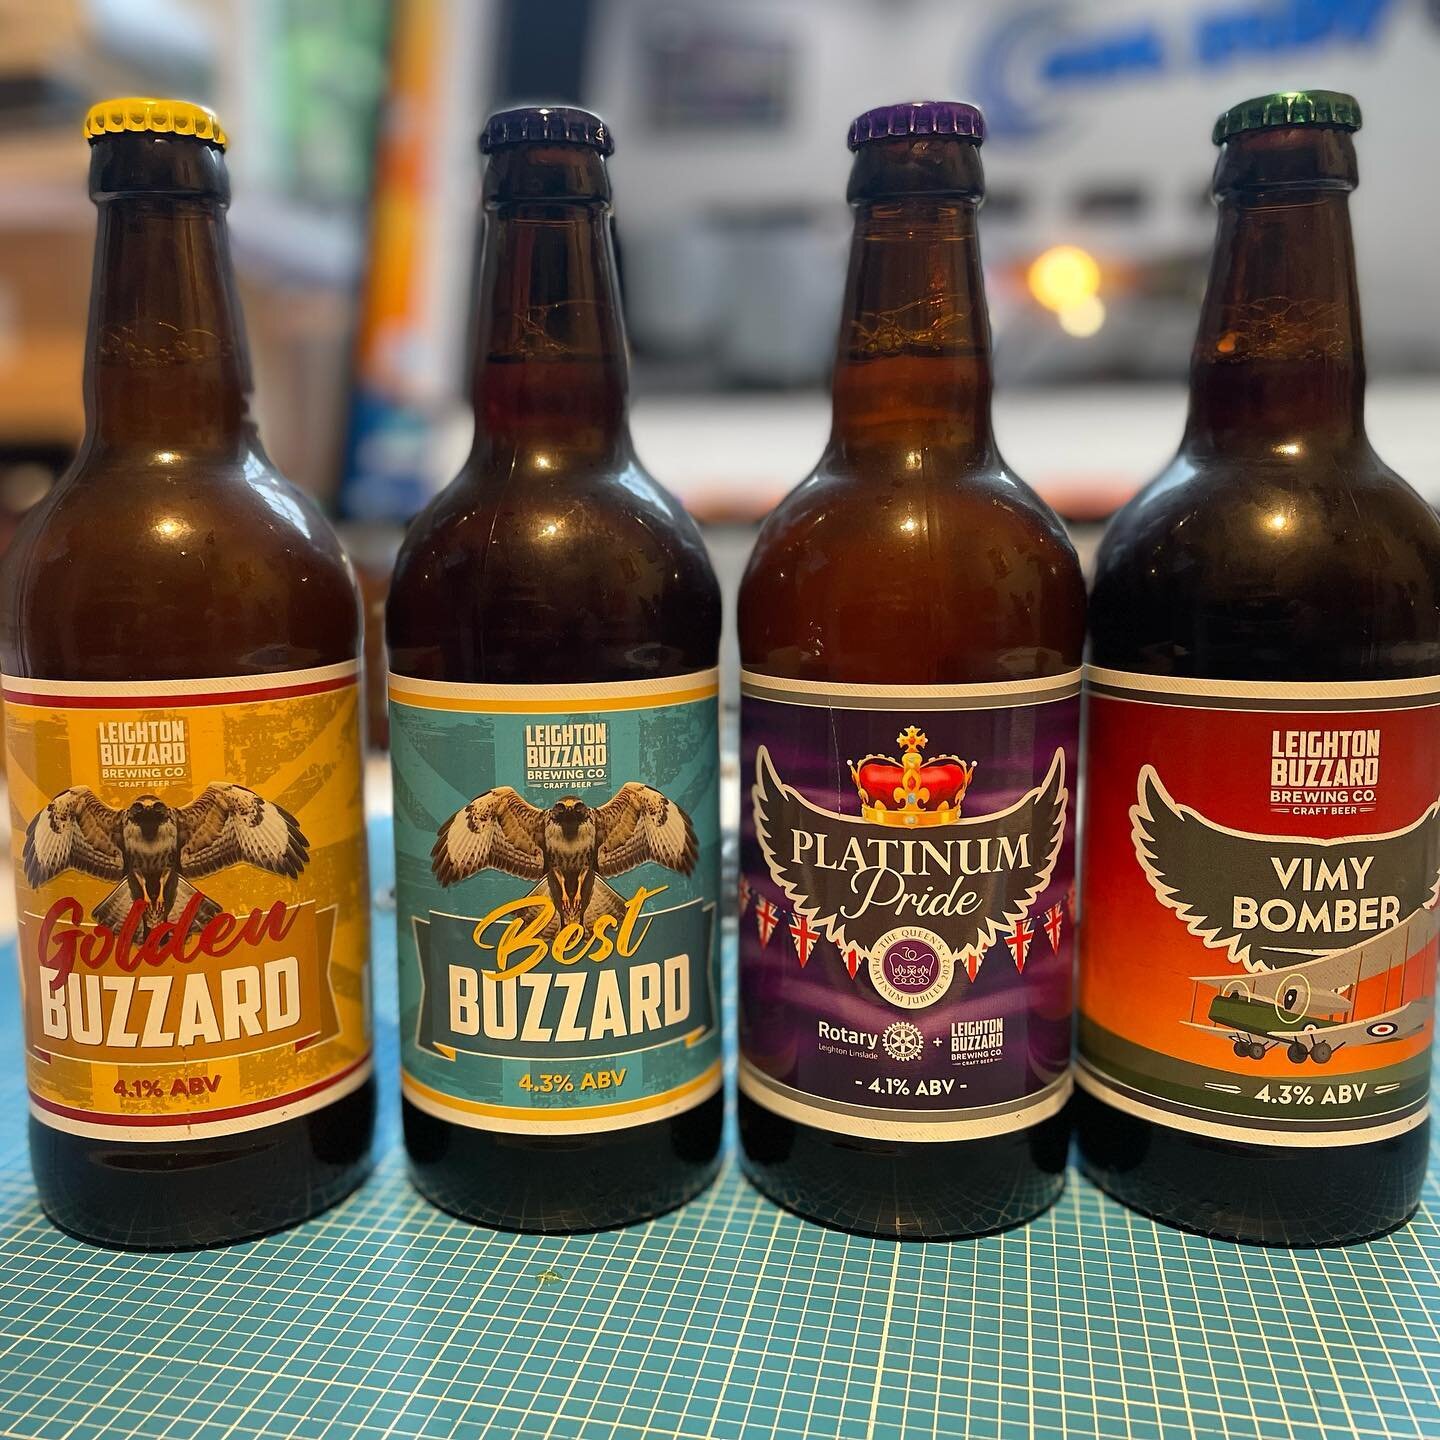 Happy Friday everyone - The weekend has landed Buzzard style #beersofinstagram #friday #leightonbuzzard @leightonbuzzardbrewing